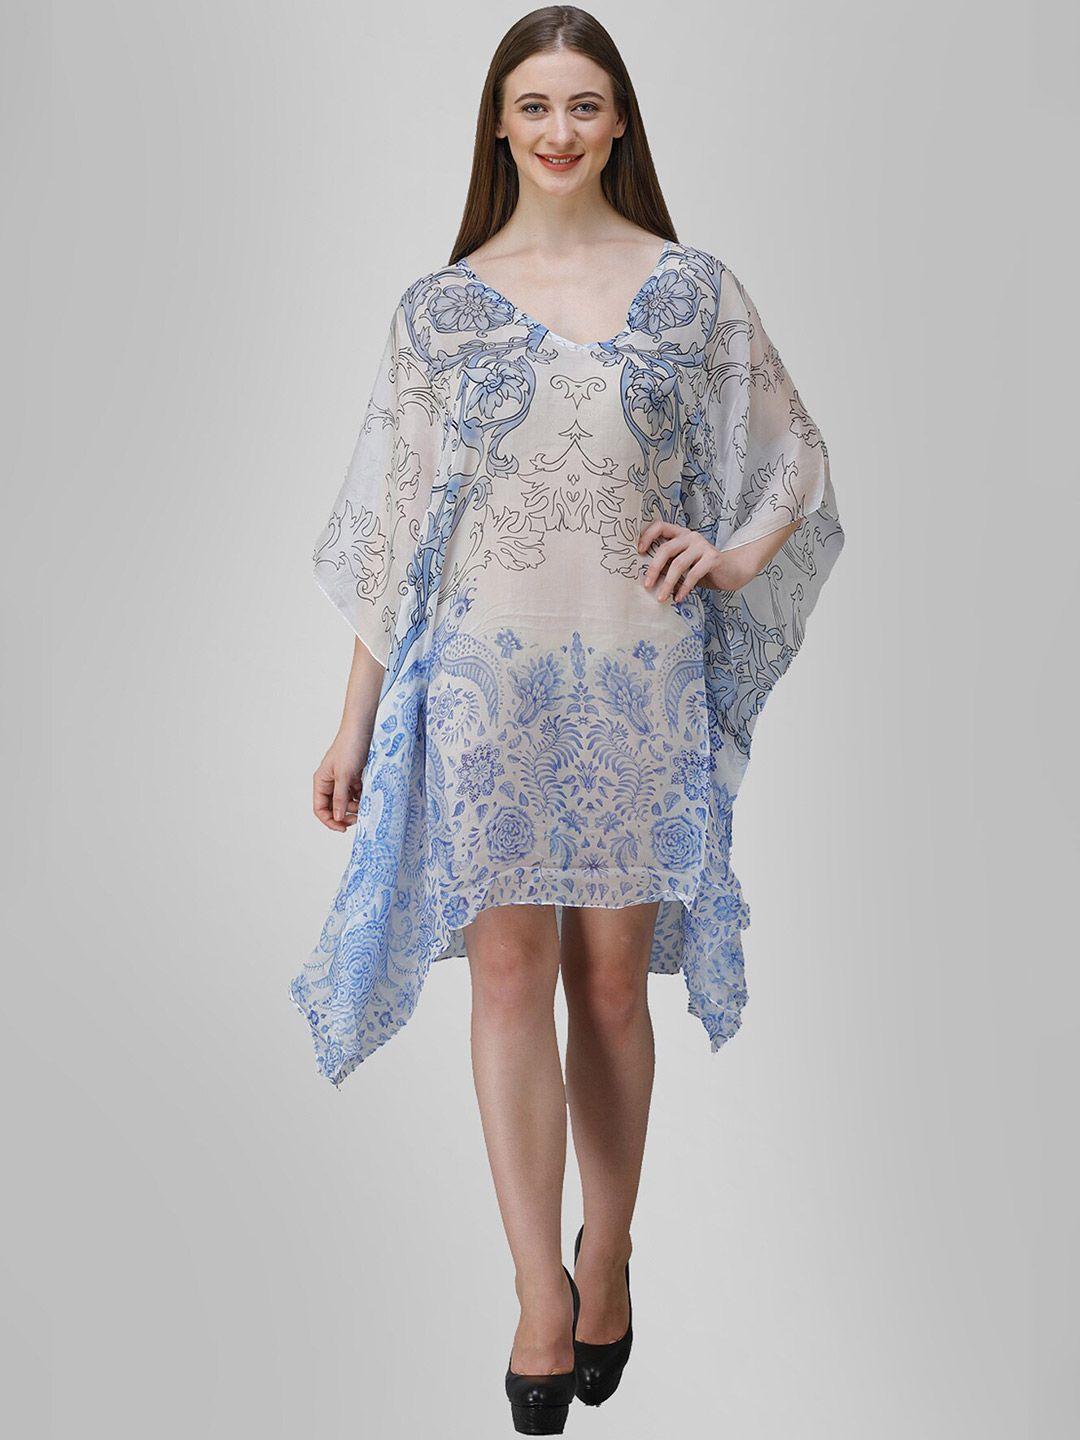 rajoria instyle off white & blue floral georgette kaftan dress